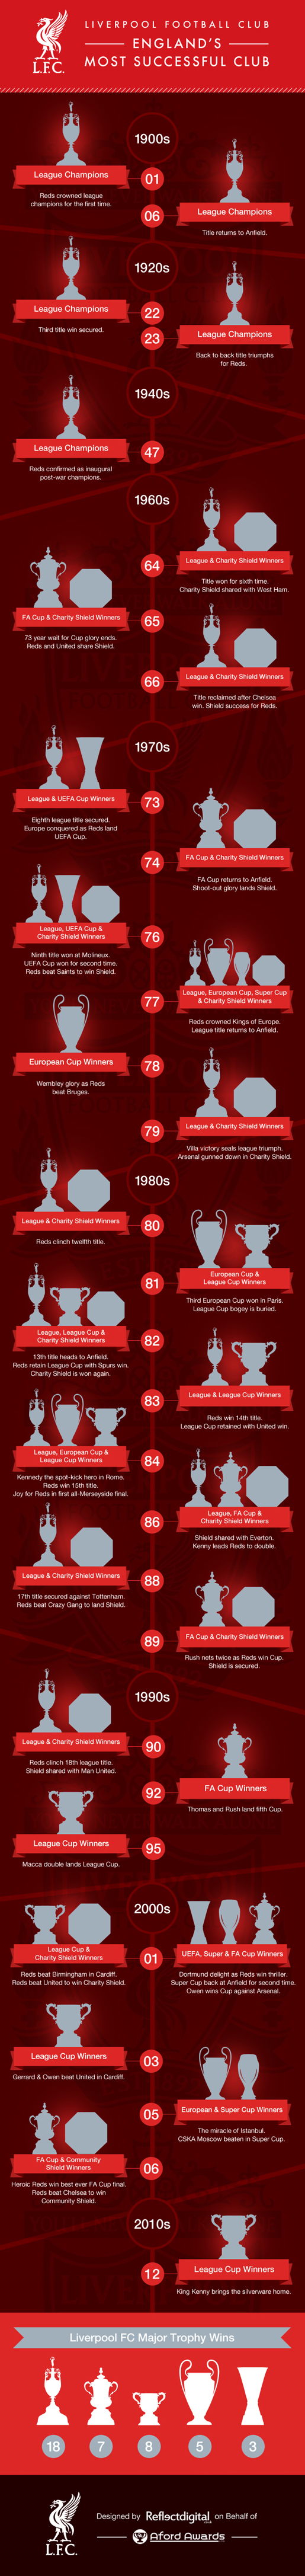 Liverpool Infographic